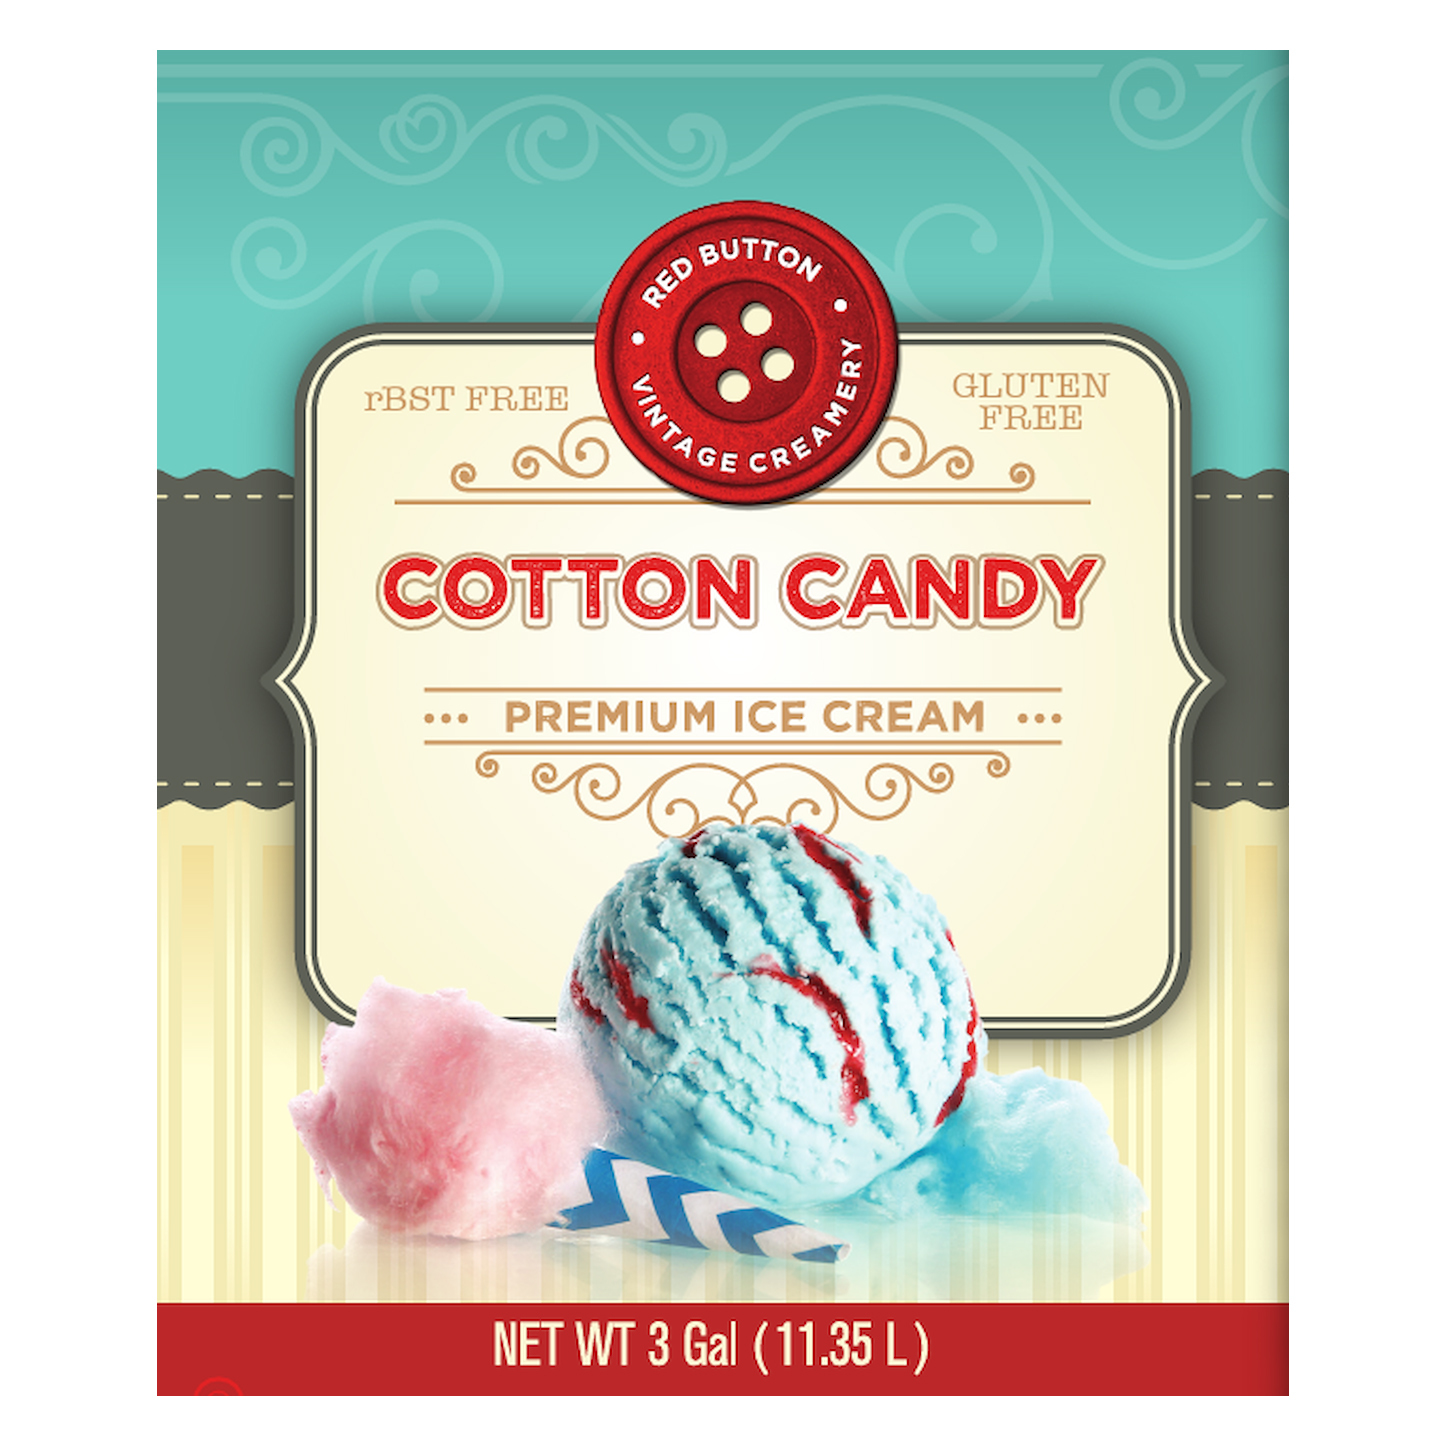 Red Button Vintage Creamery Premium Cotton Candy Premium Ice Cream